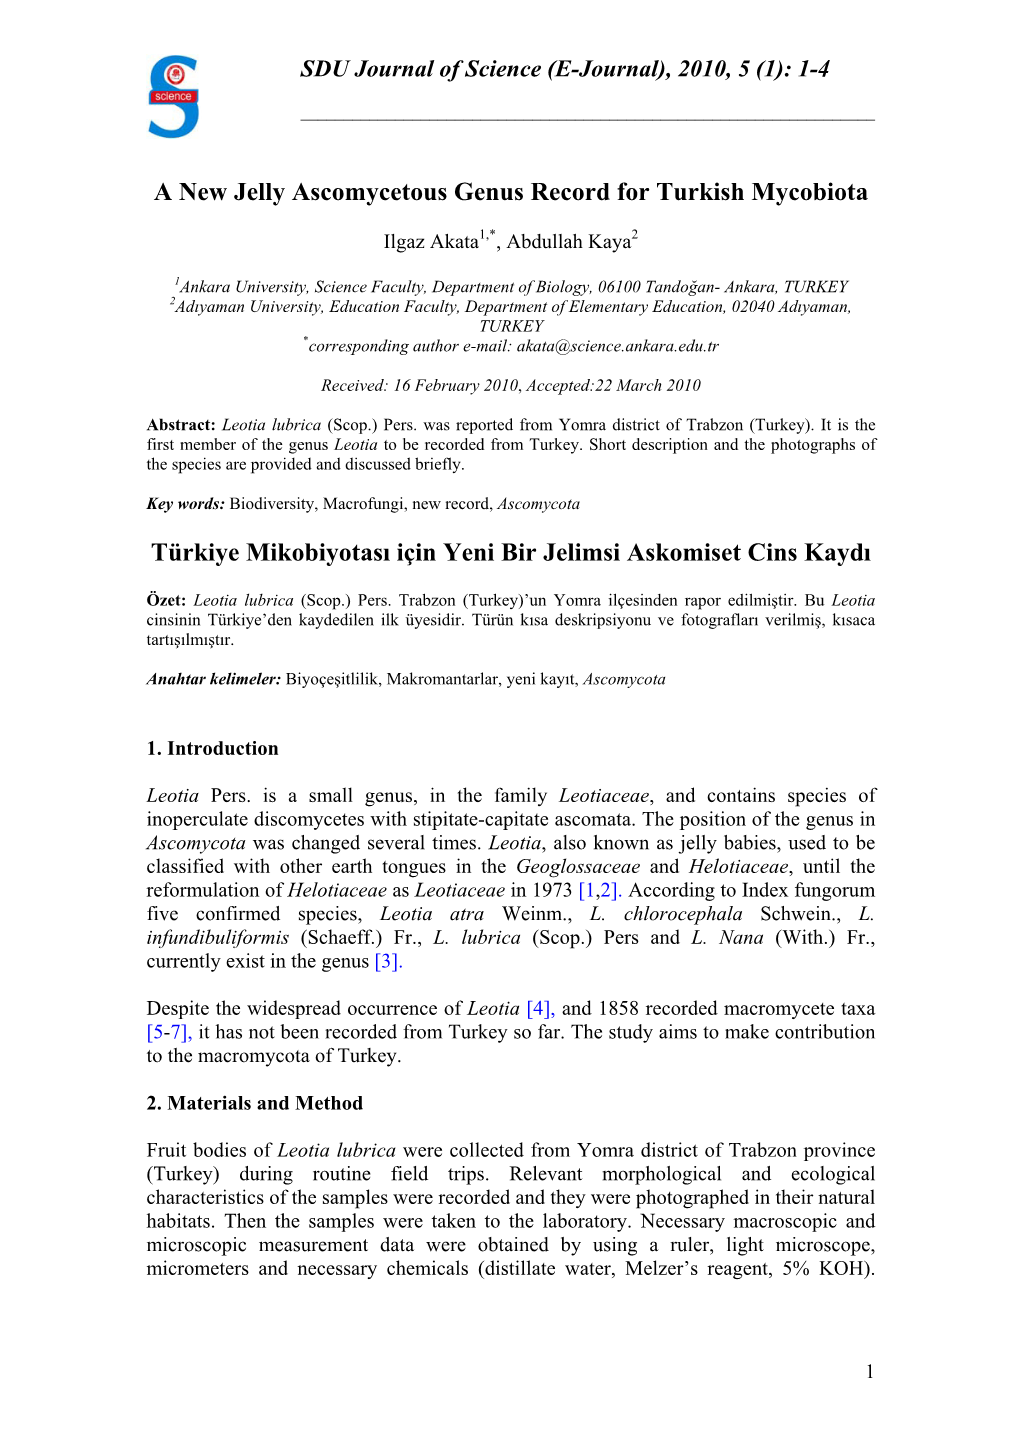 A New Jelly Ascomycetous Genus Record for Turkish Mycobiota